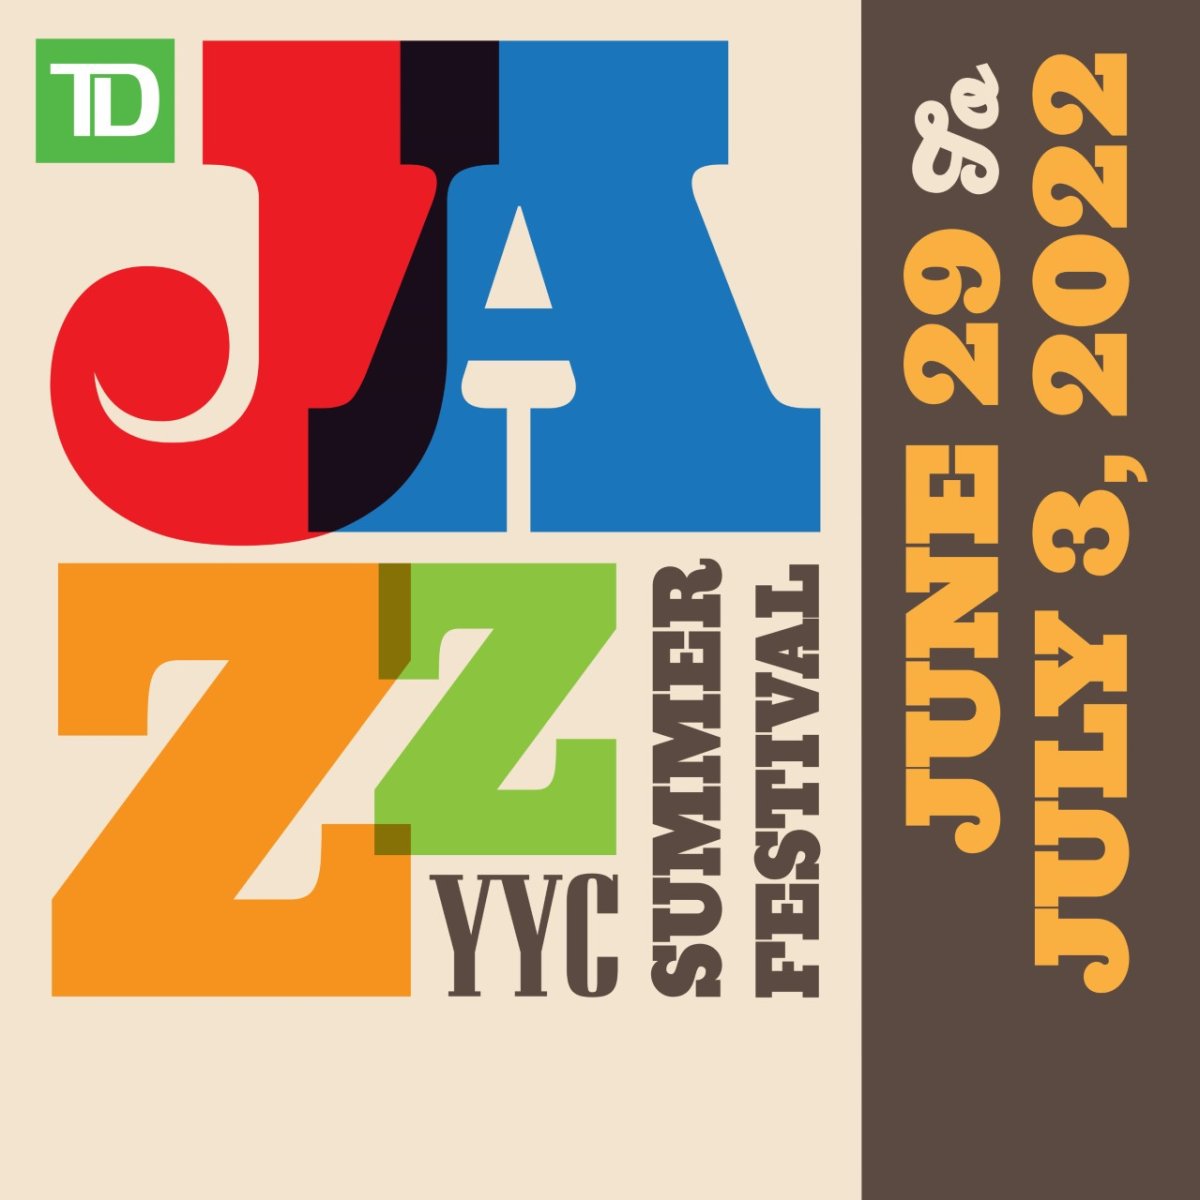 TD JazzYYC Summer Festival - image